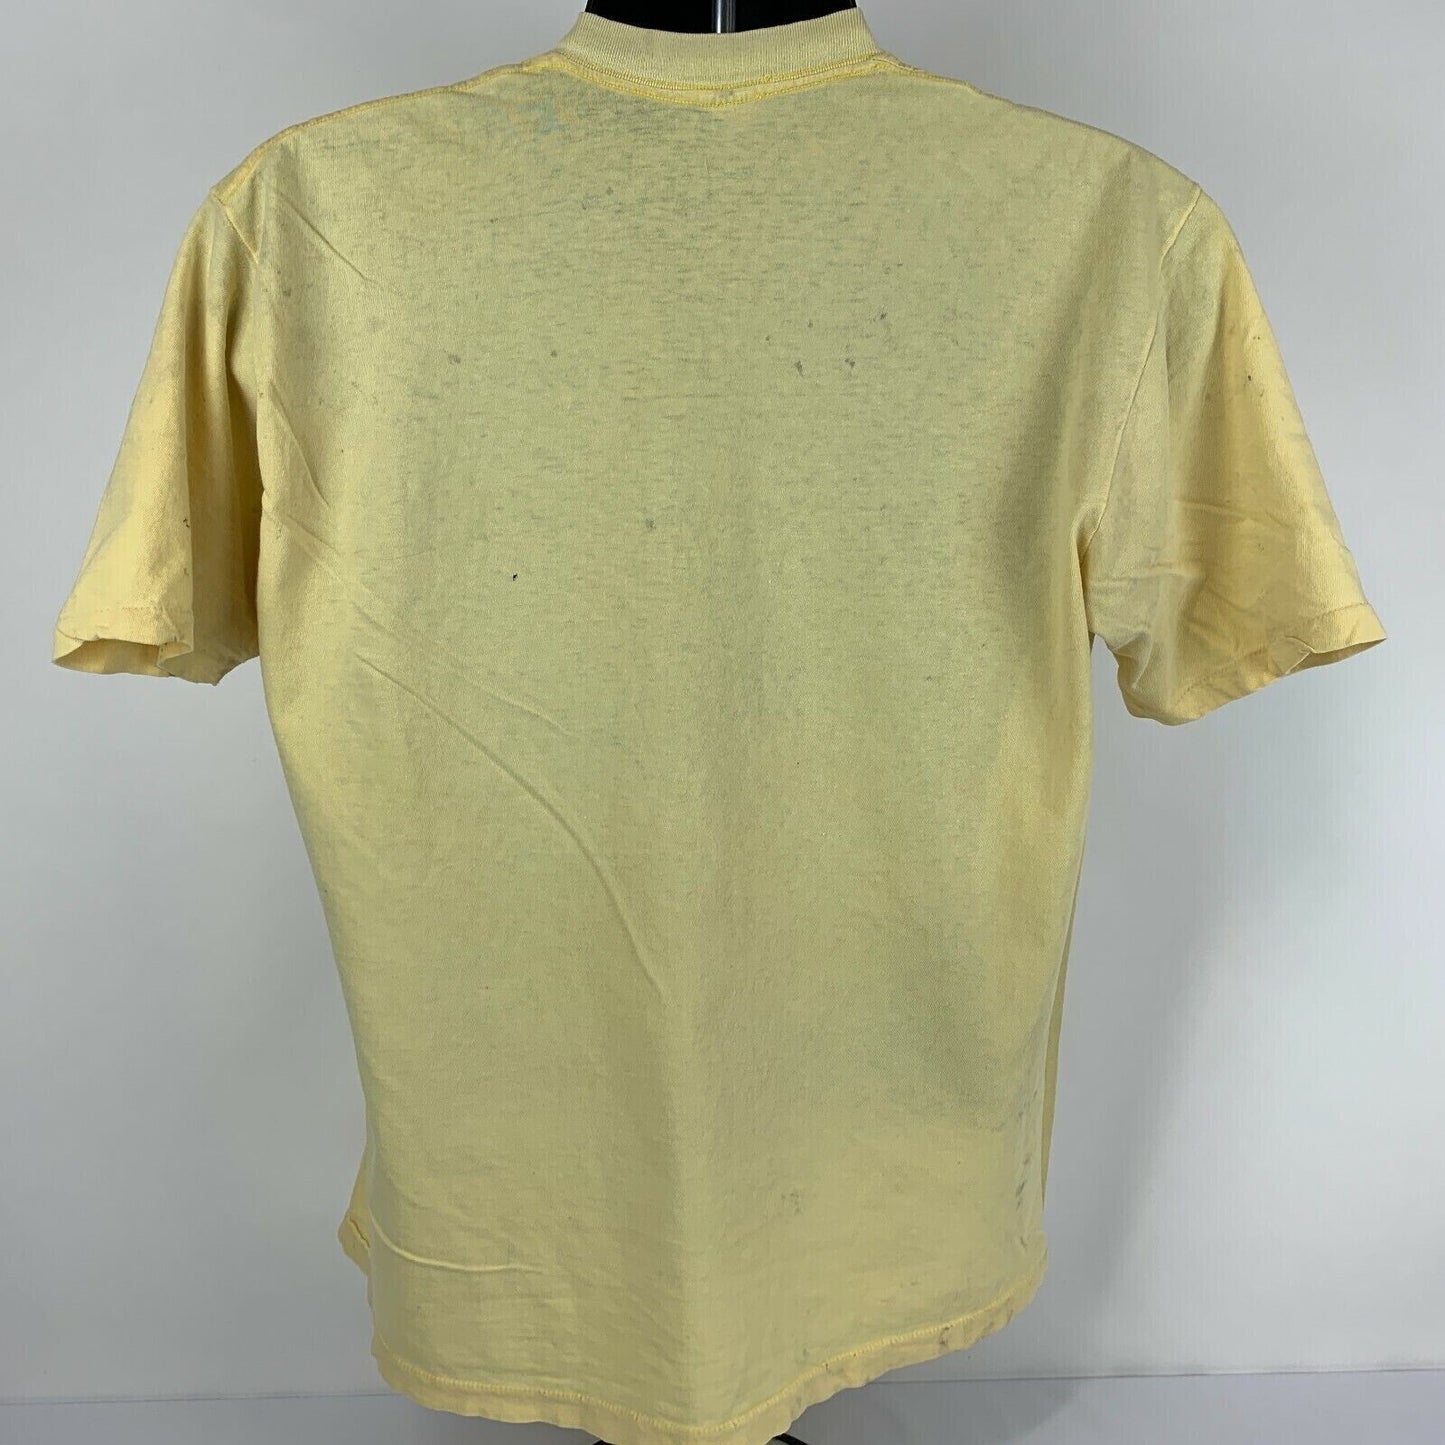 Distressed Breckenridge Colorado Hiking Vintage 70s T Shirt Large Mens Yellow